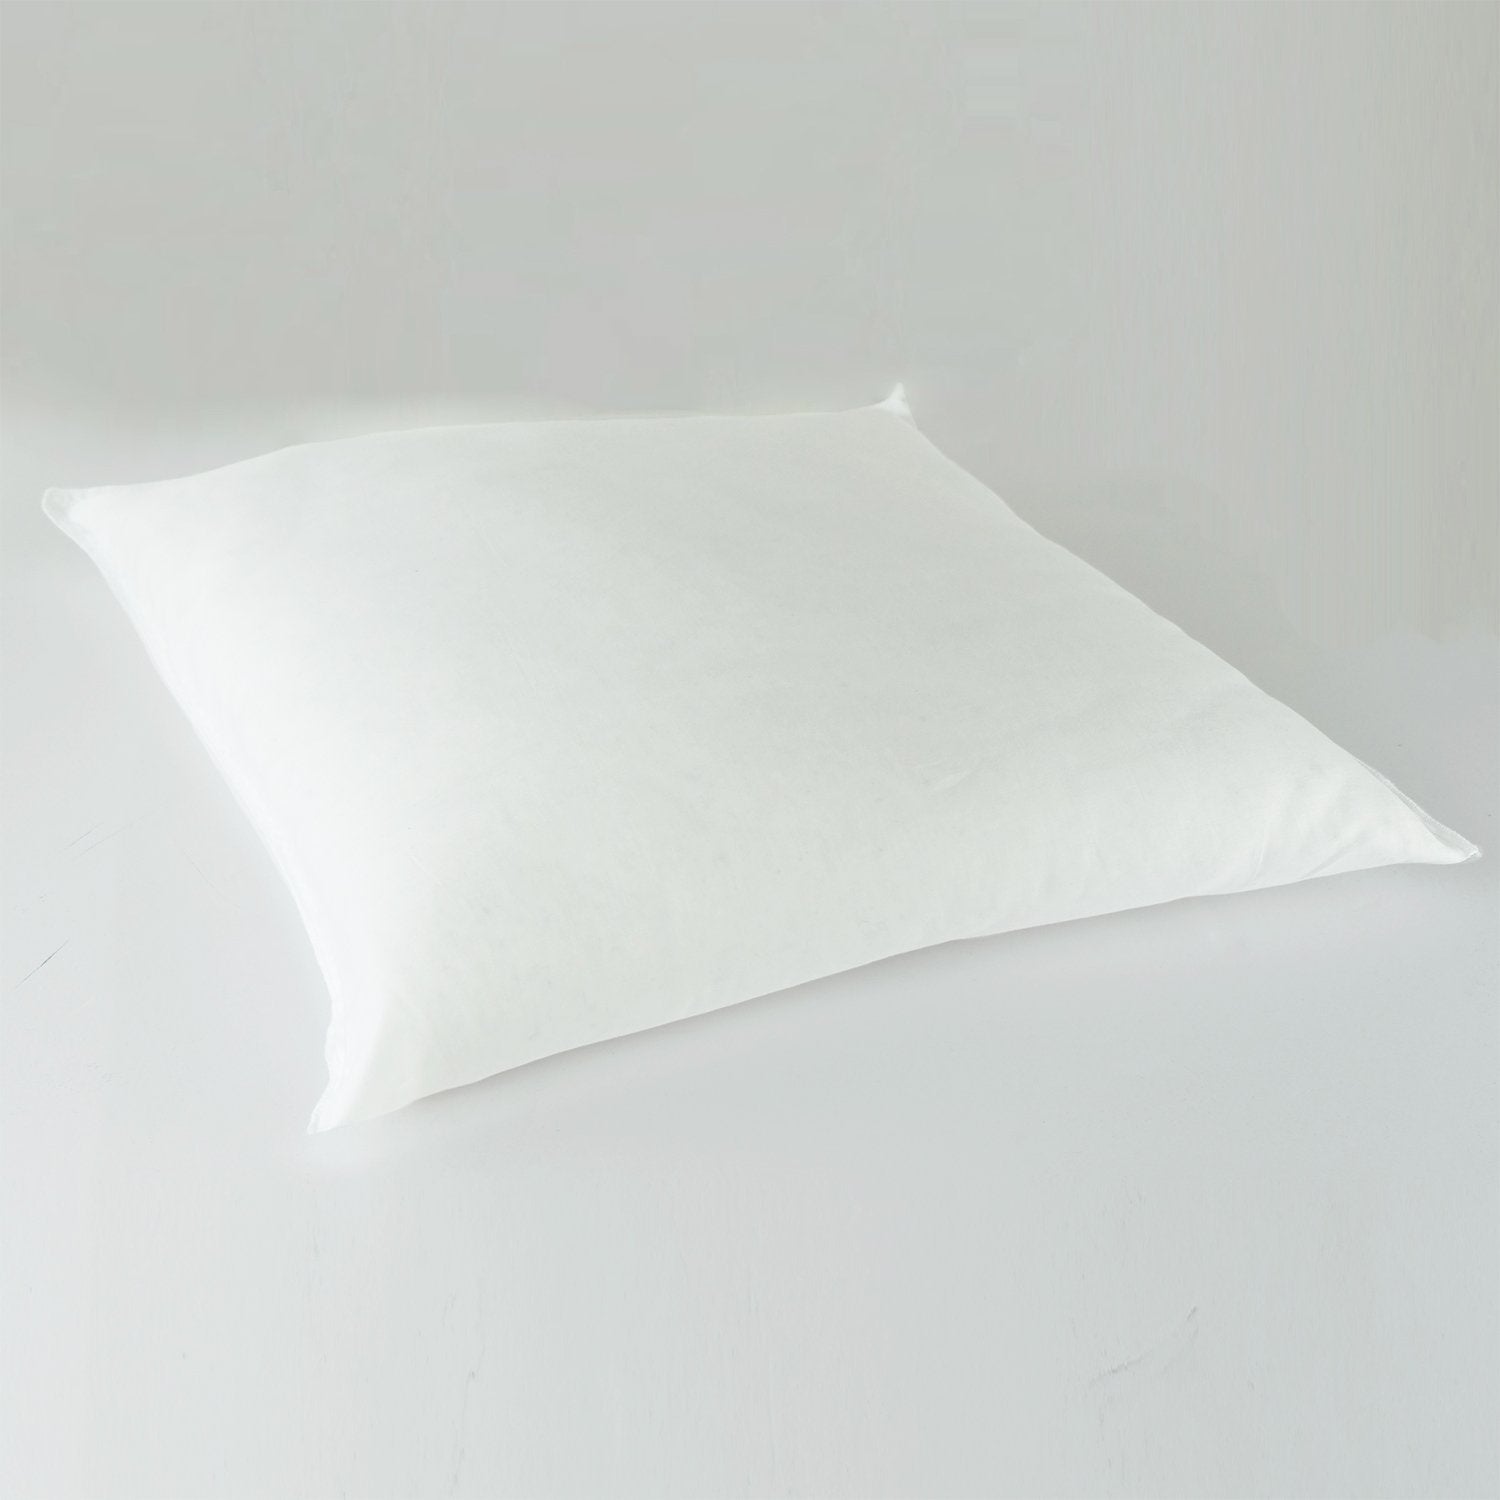 J-Life Sakura Red Zabuton Floor Pillow_Pillows & Shams_Zabuton Floor Pillows_100% Cotton_Reversible_Handmade